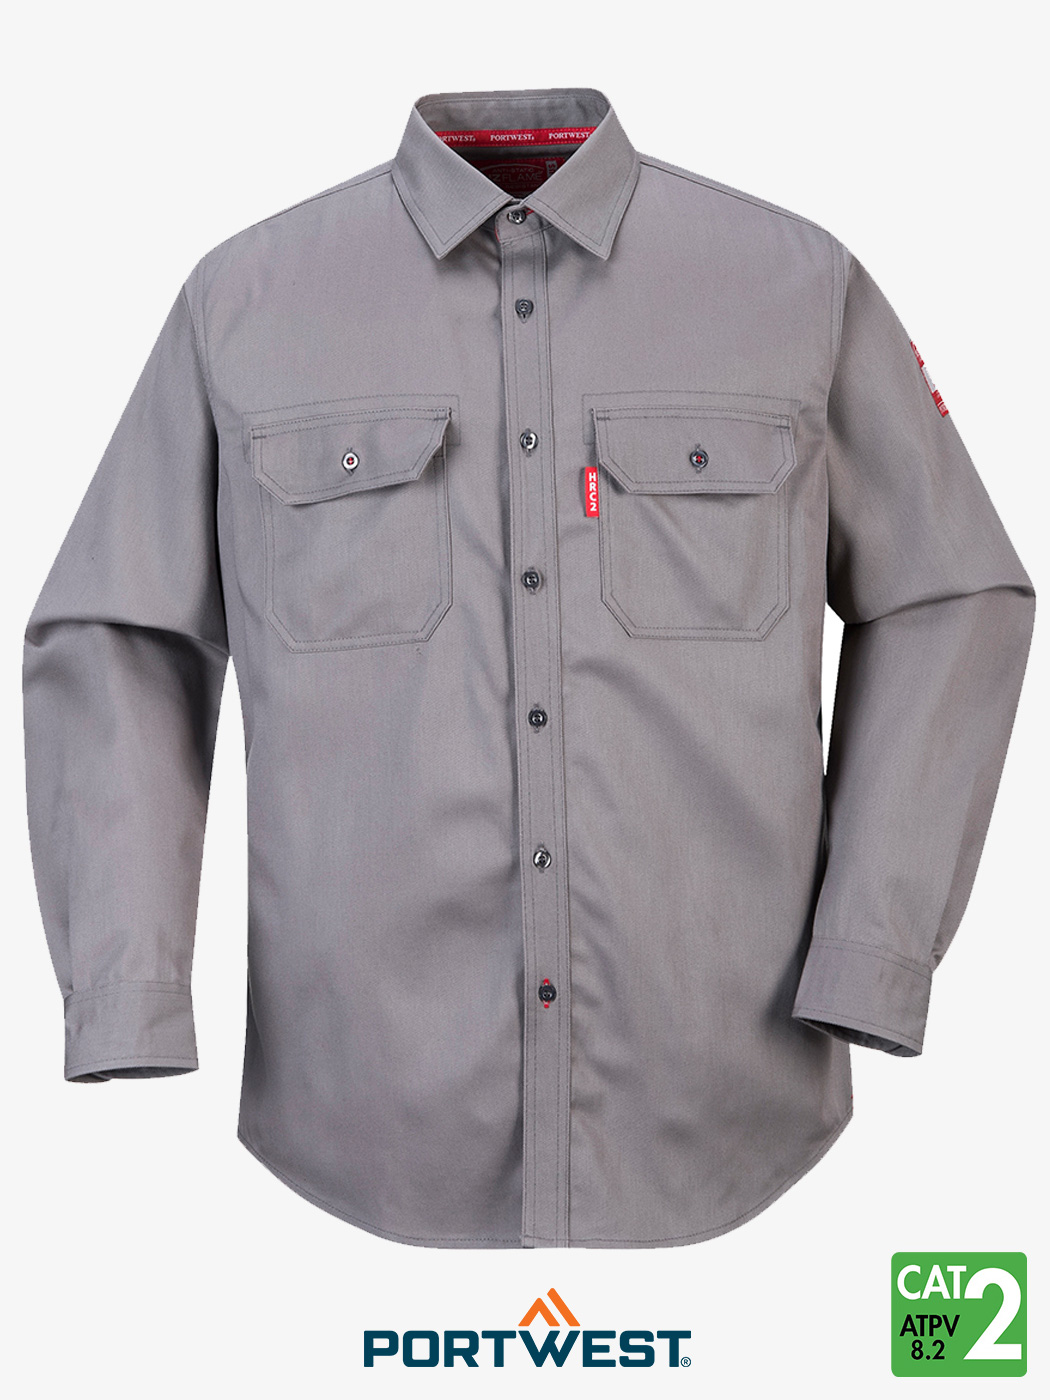 Bizflame® 88/12 7 oz FR Work Shirt – Style FR89